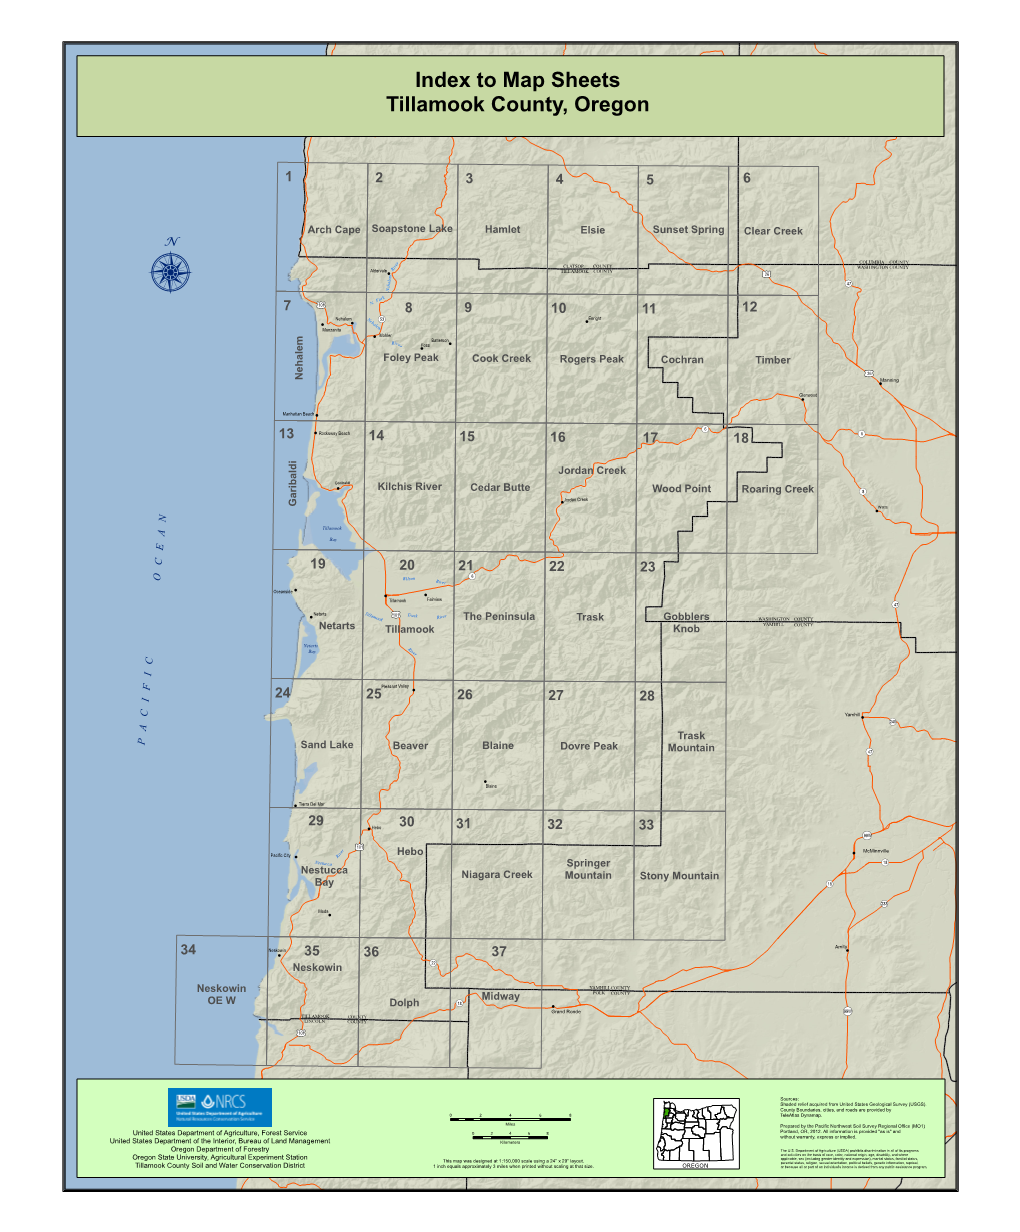 Soil Survey of Tillamook County, Oregon